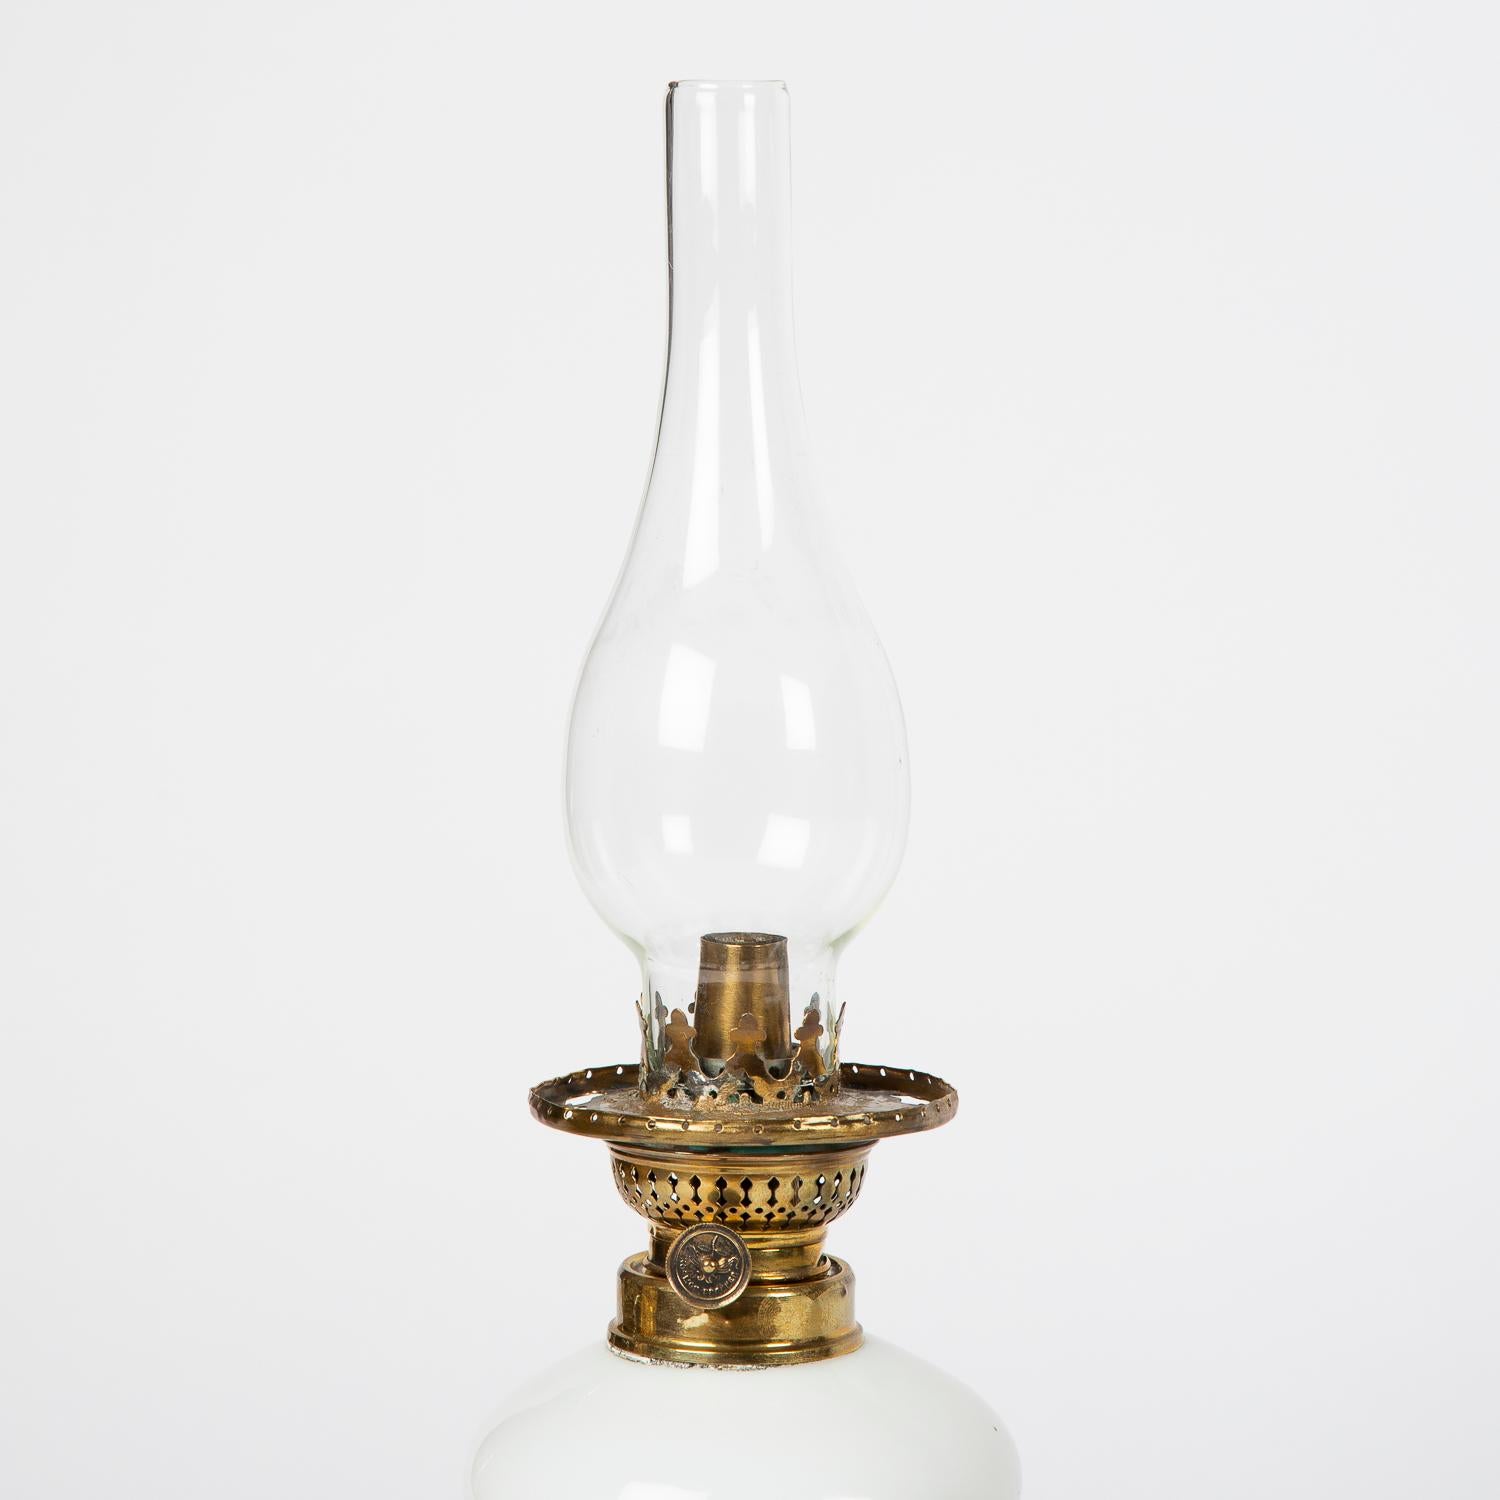 19th Century Oil Lamp with an Illuminating Globe Shade, Bohemian, circa 1885 For Sale